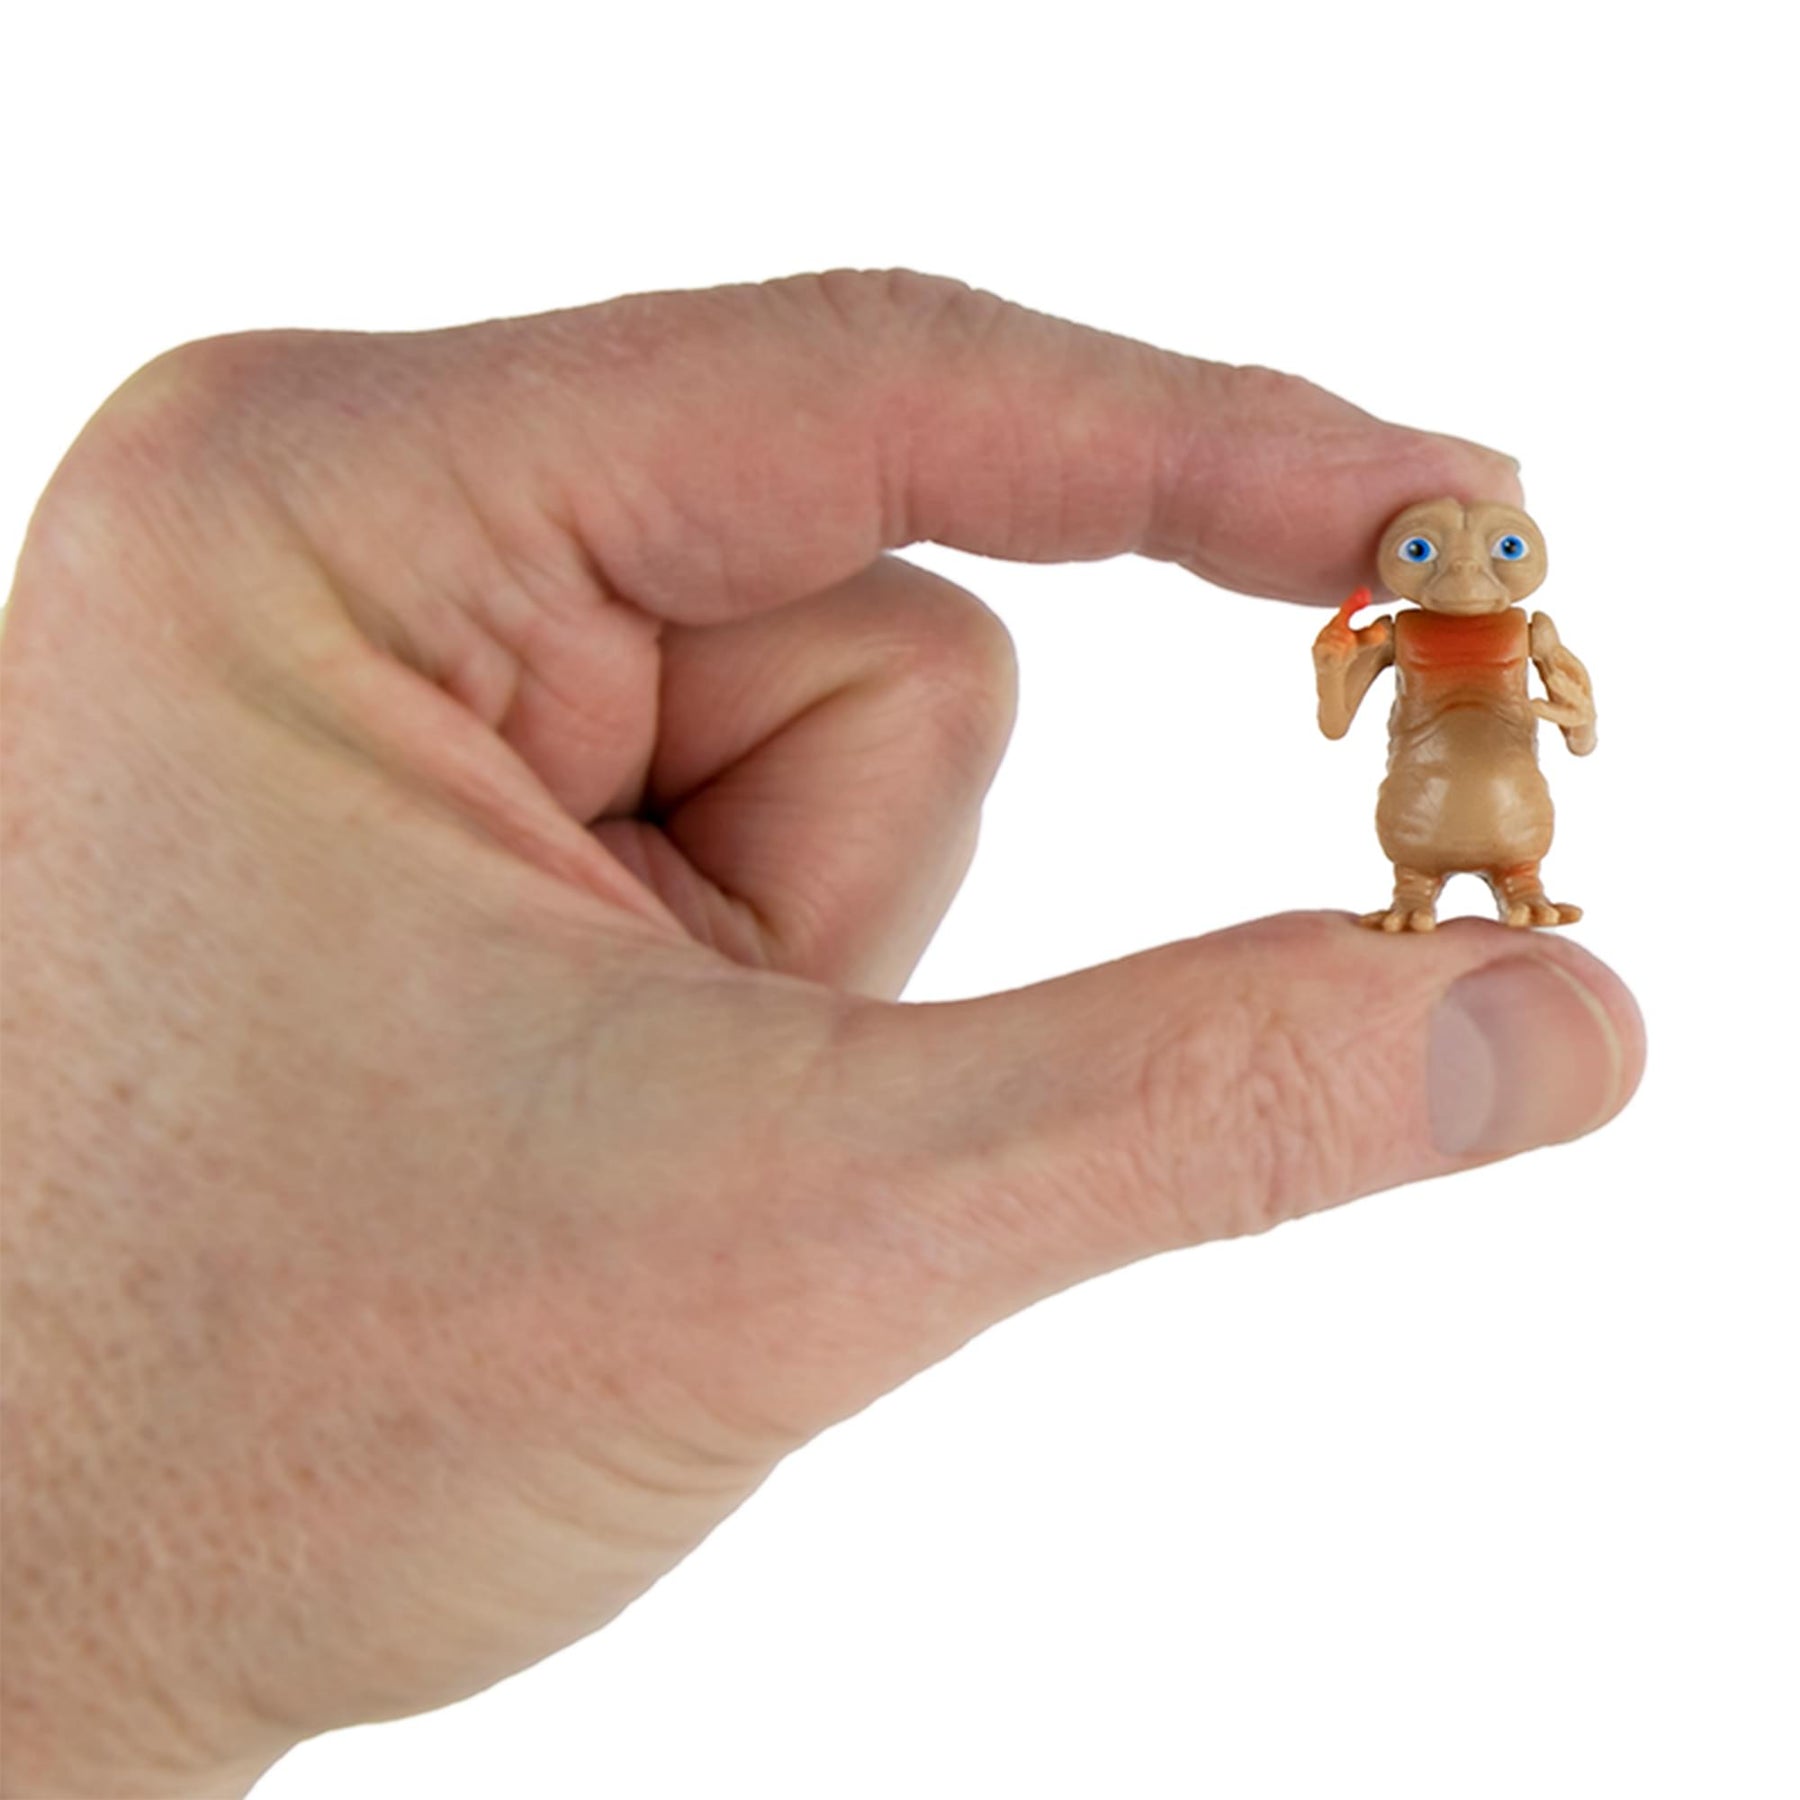 Worlds Smallest Micro Figure | ET